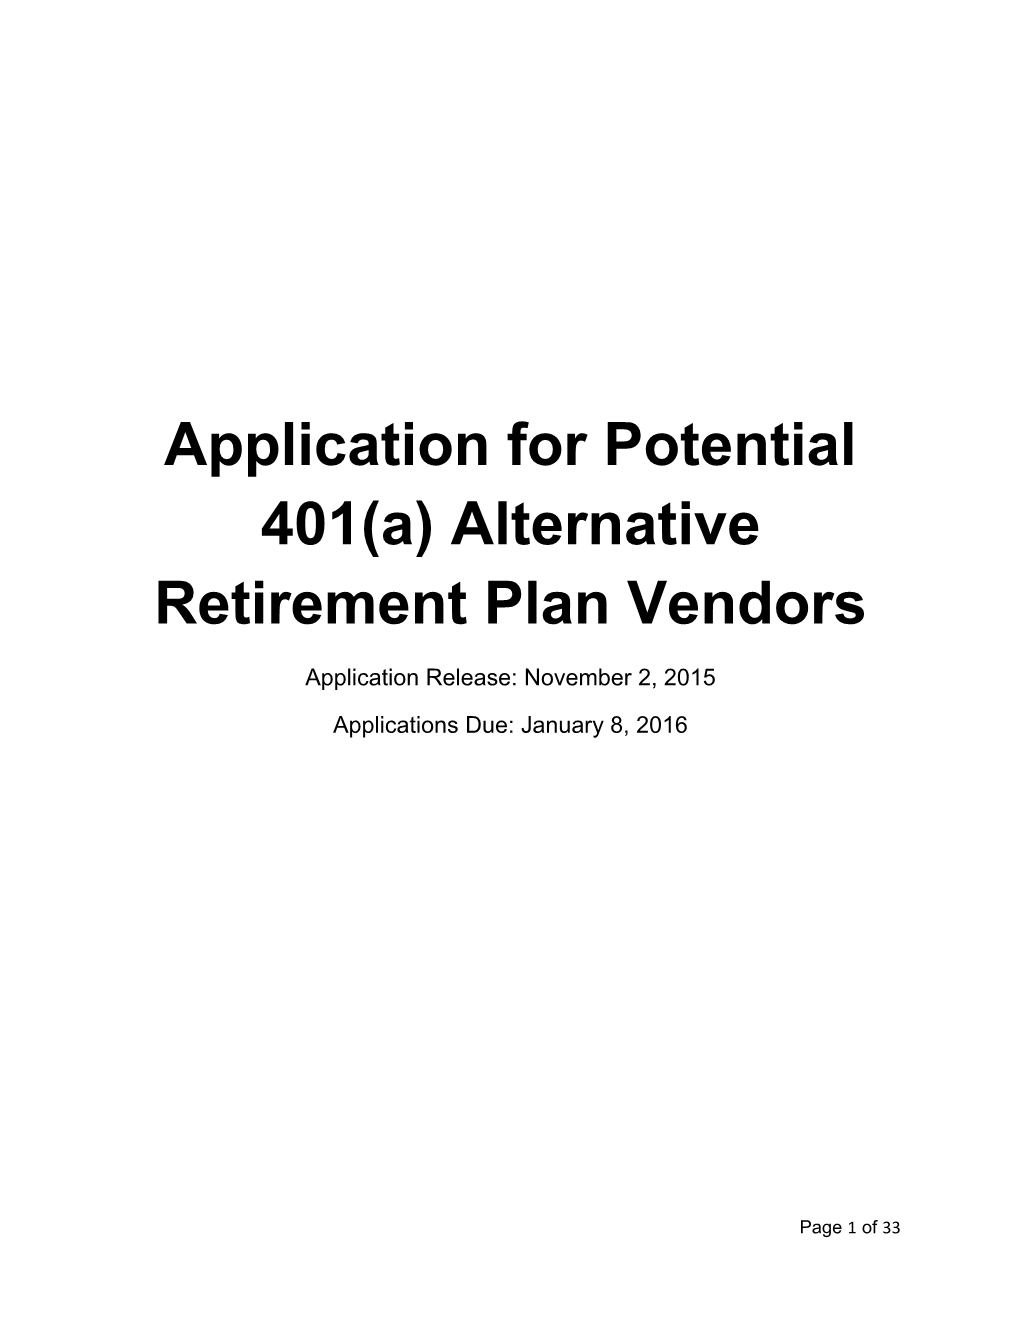 Application for Potential 401(A) Alternative Retirement Plan Vendors